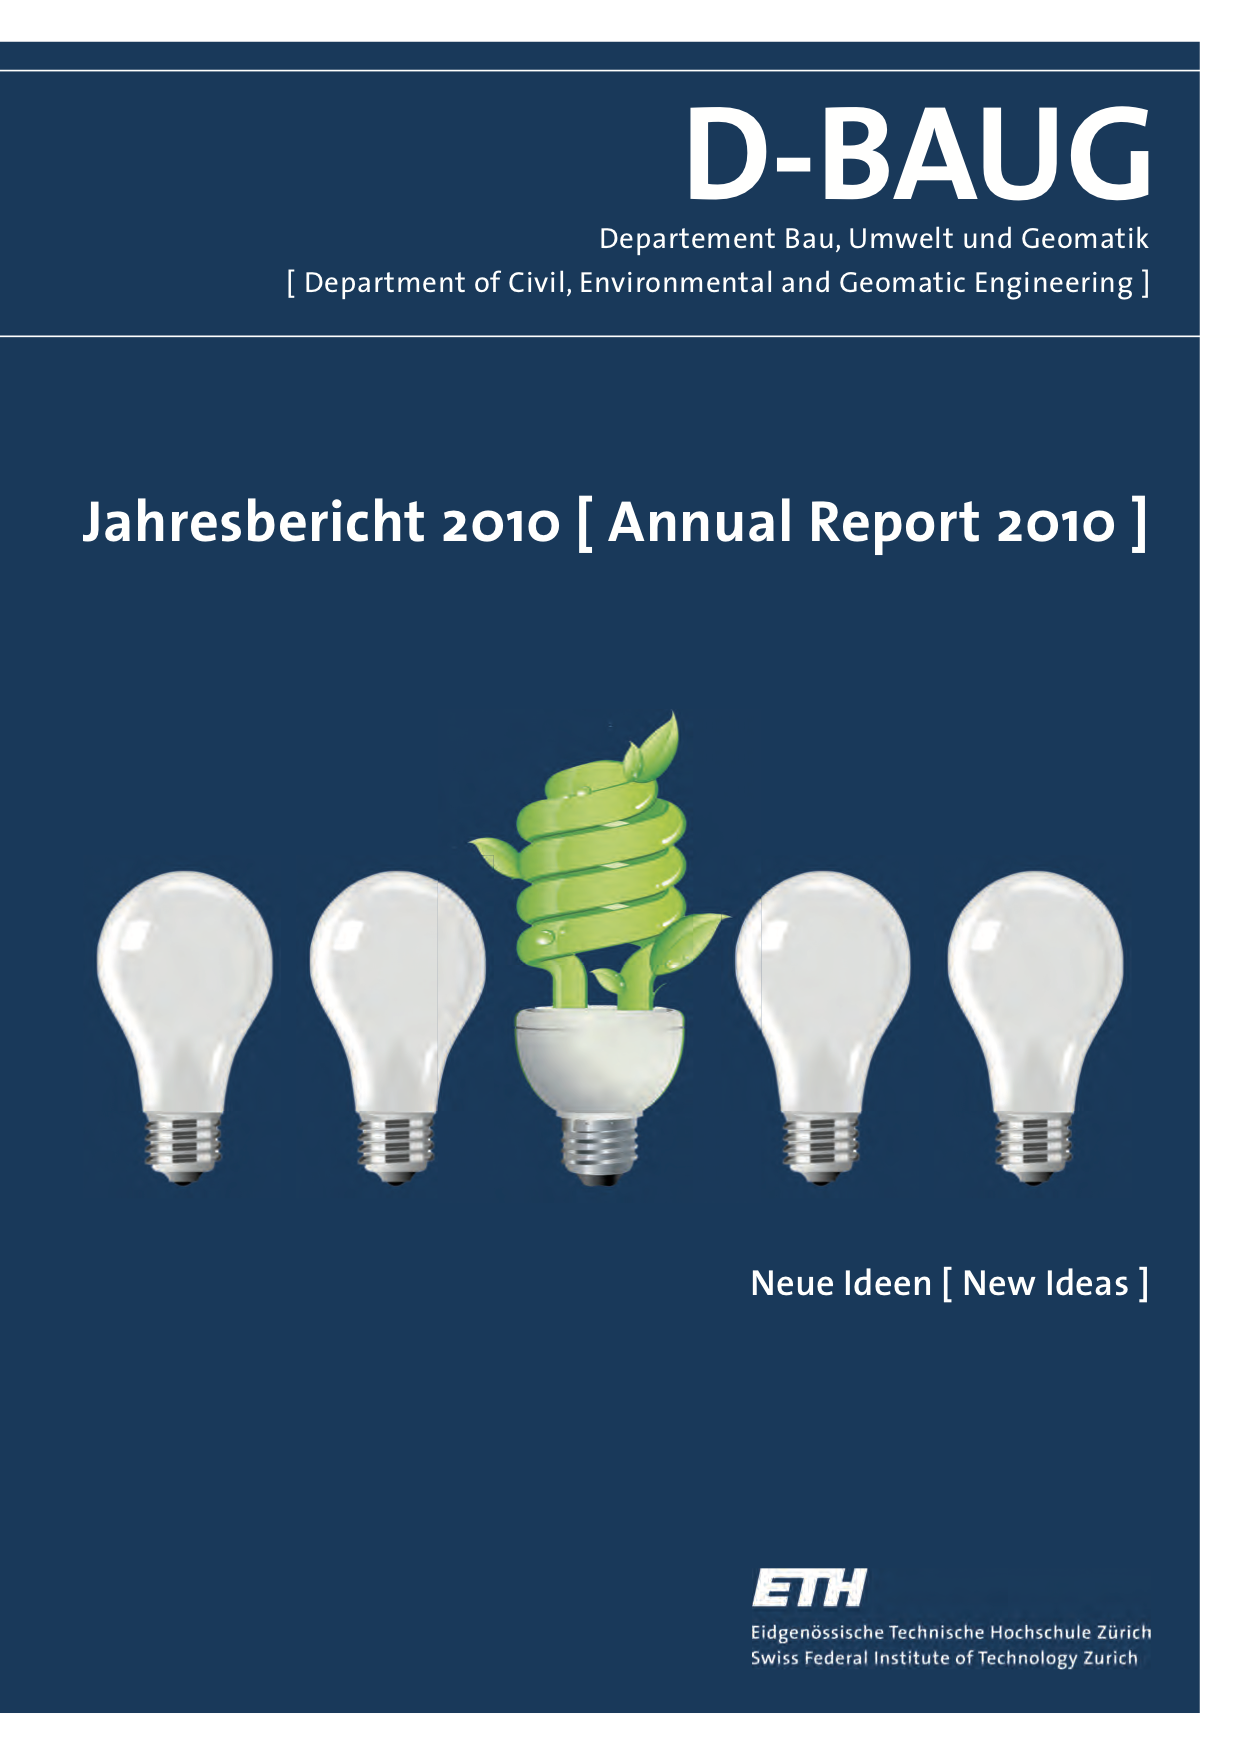 D-BAUG Annual report 2010